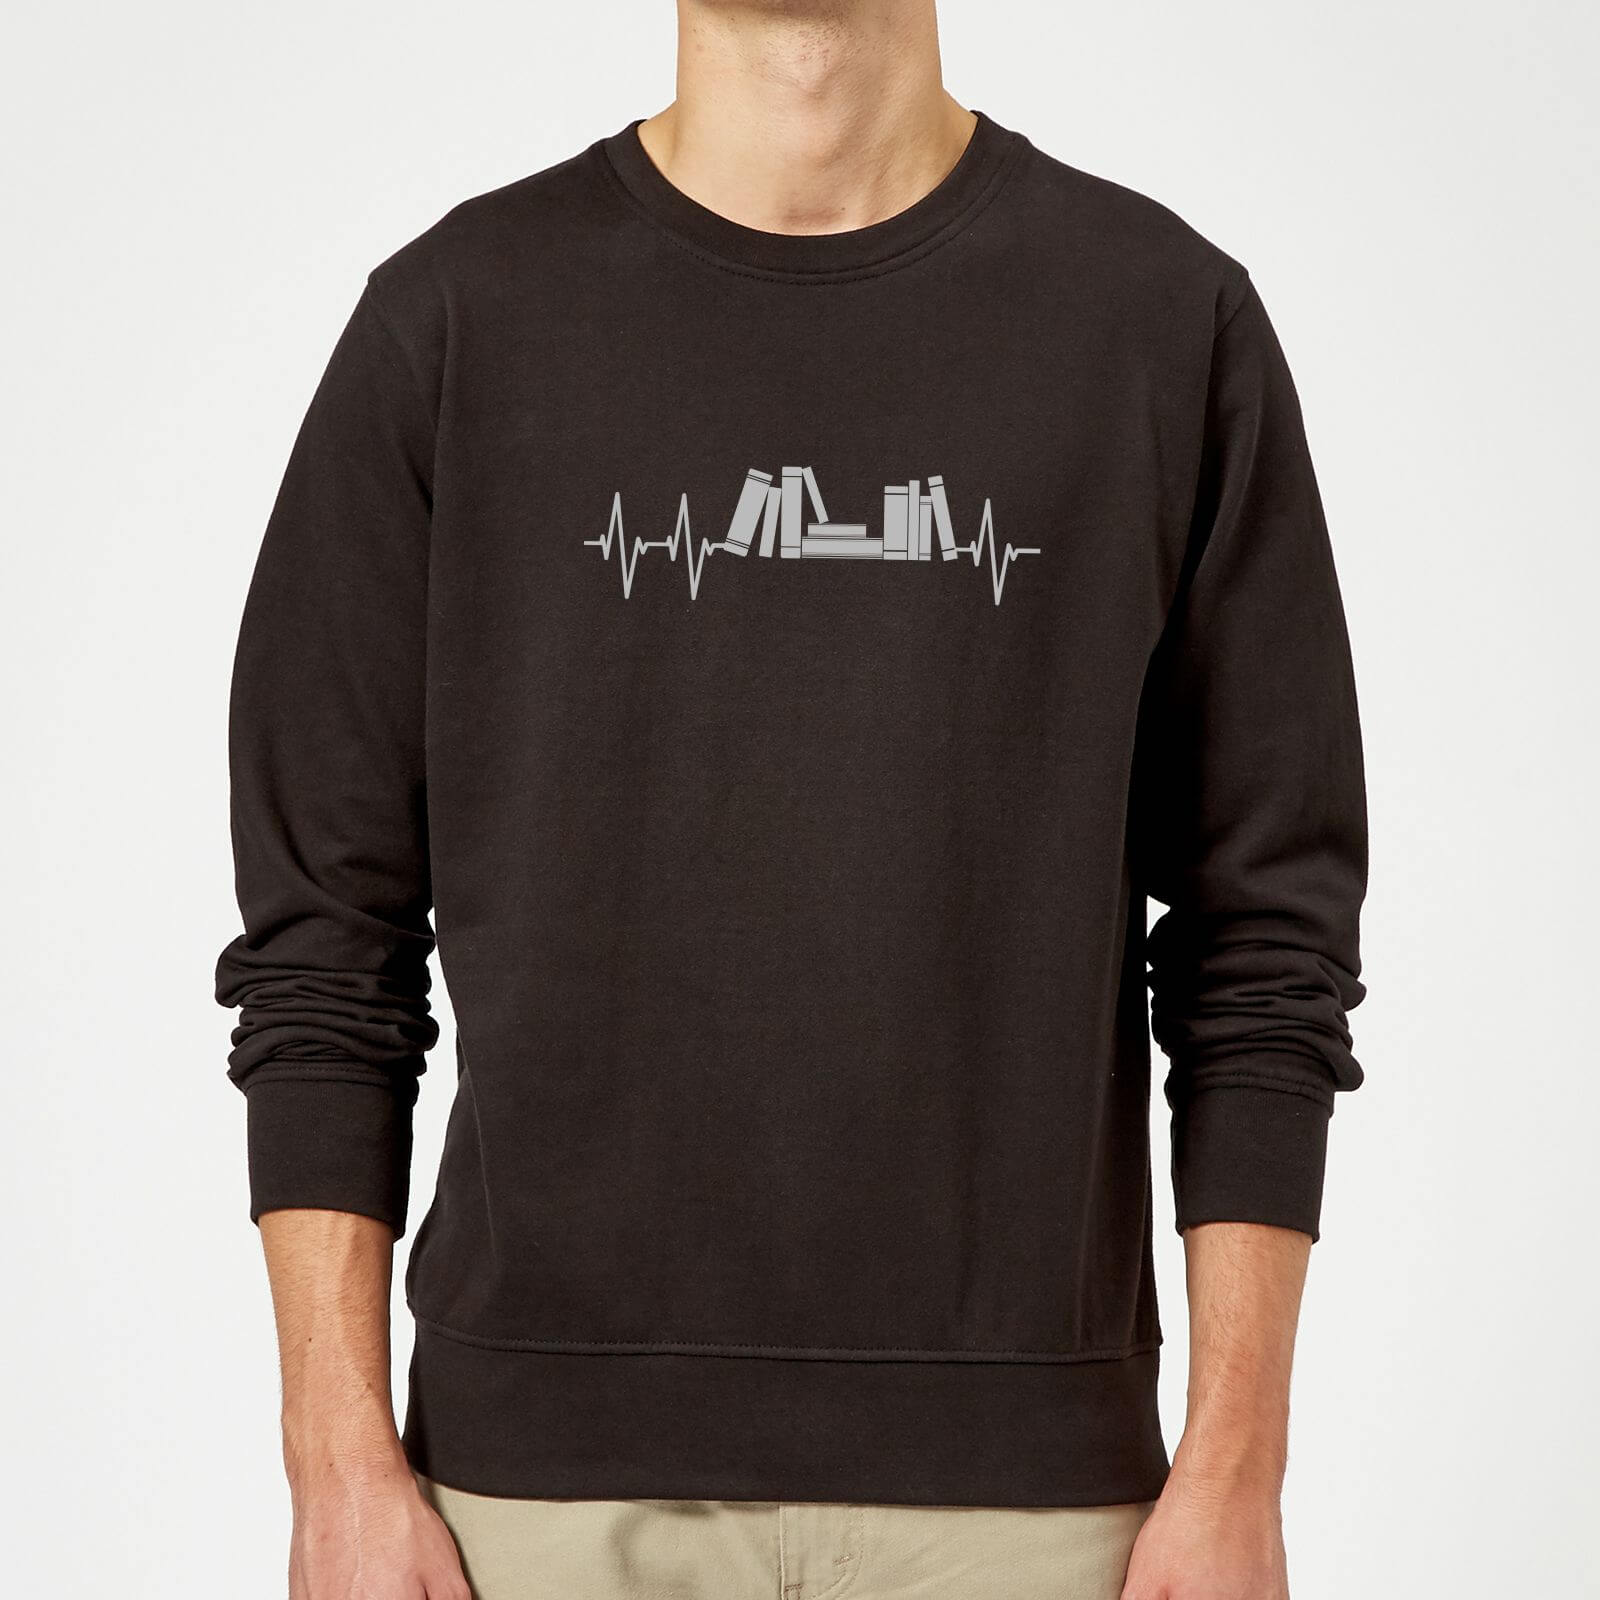 Heartbeat Books Sweatshirt - Black - XL - Black